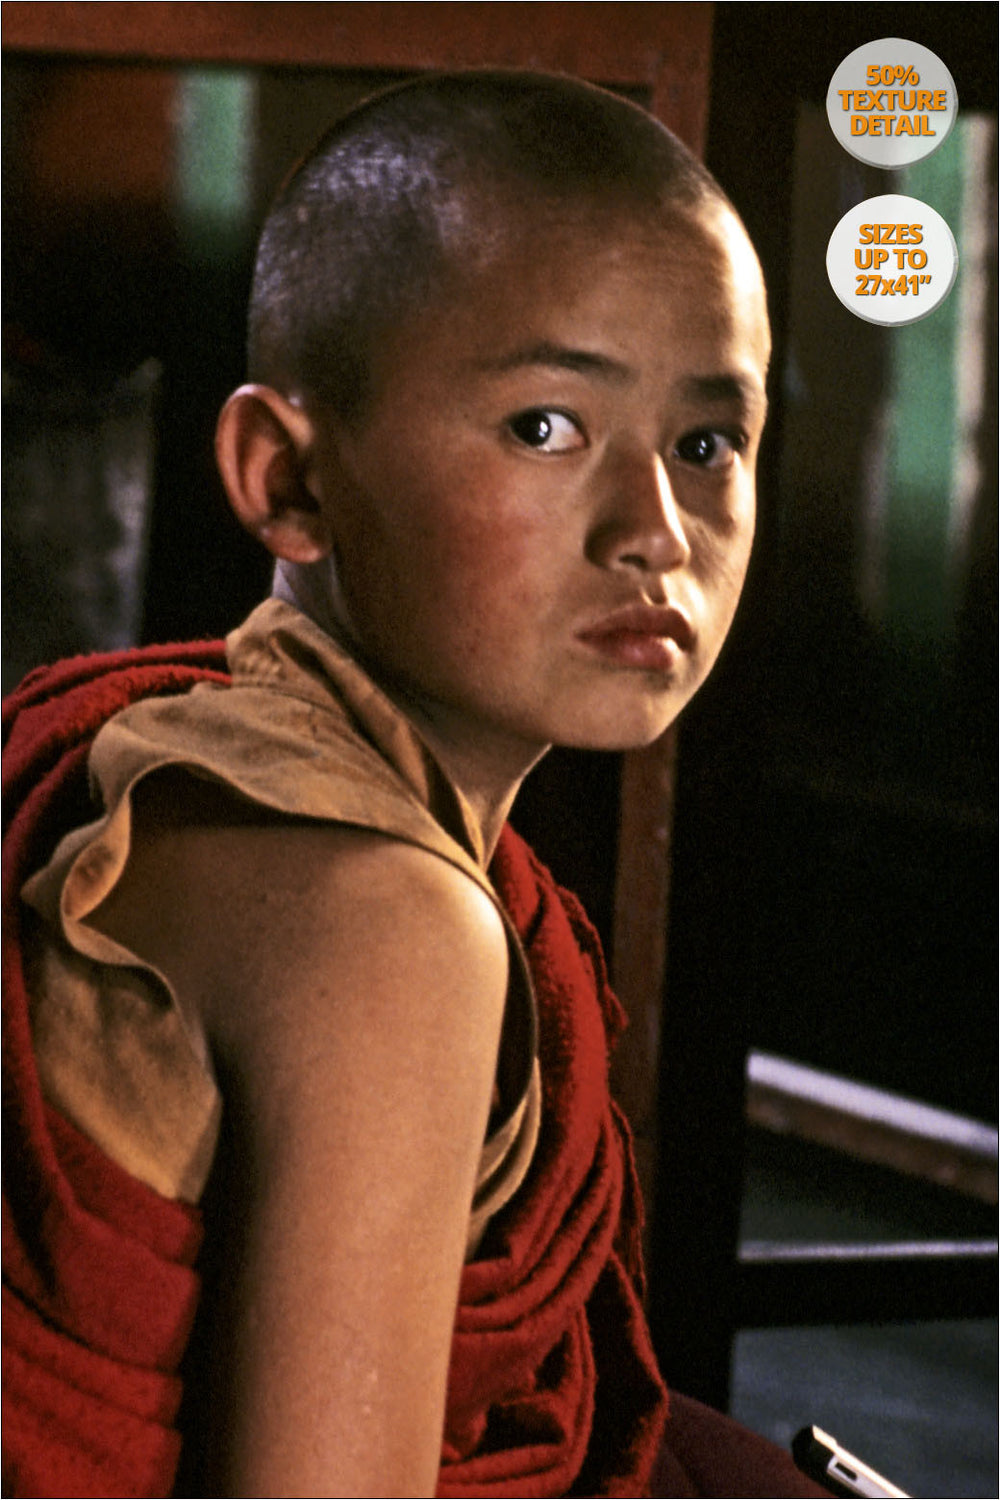 Monk Child doing homework, Swayambunath, Kathmandu. | 50% Magnification Detail.